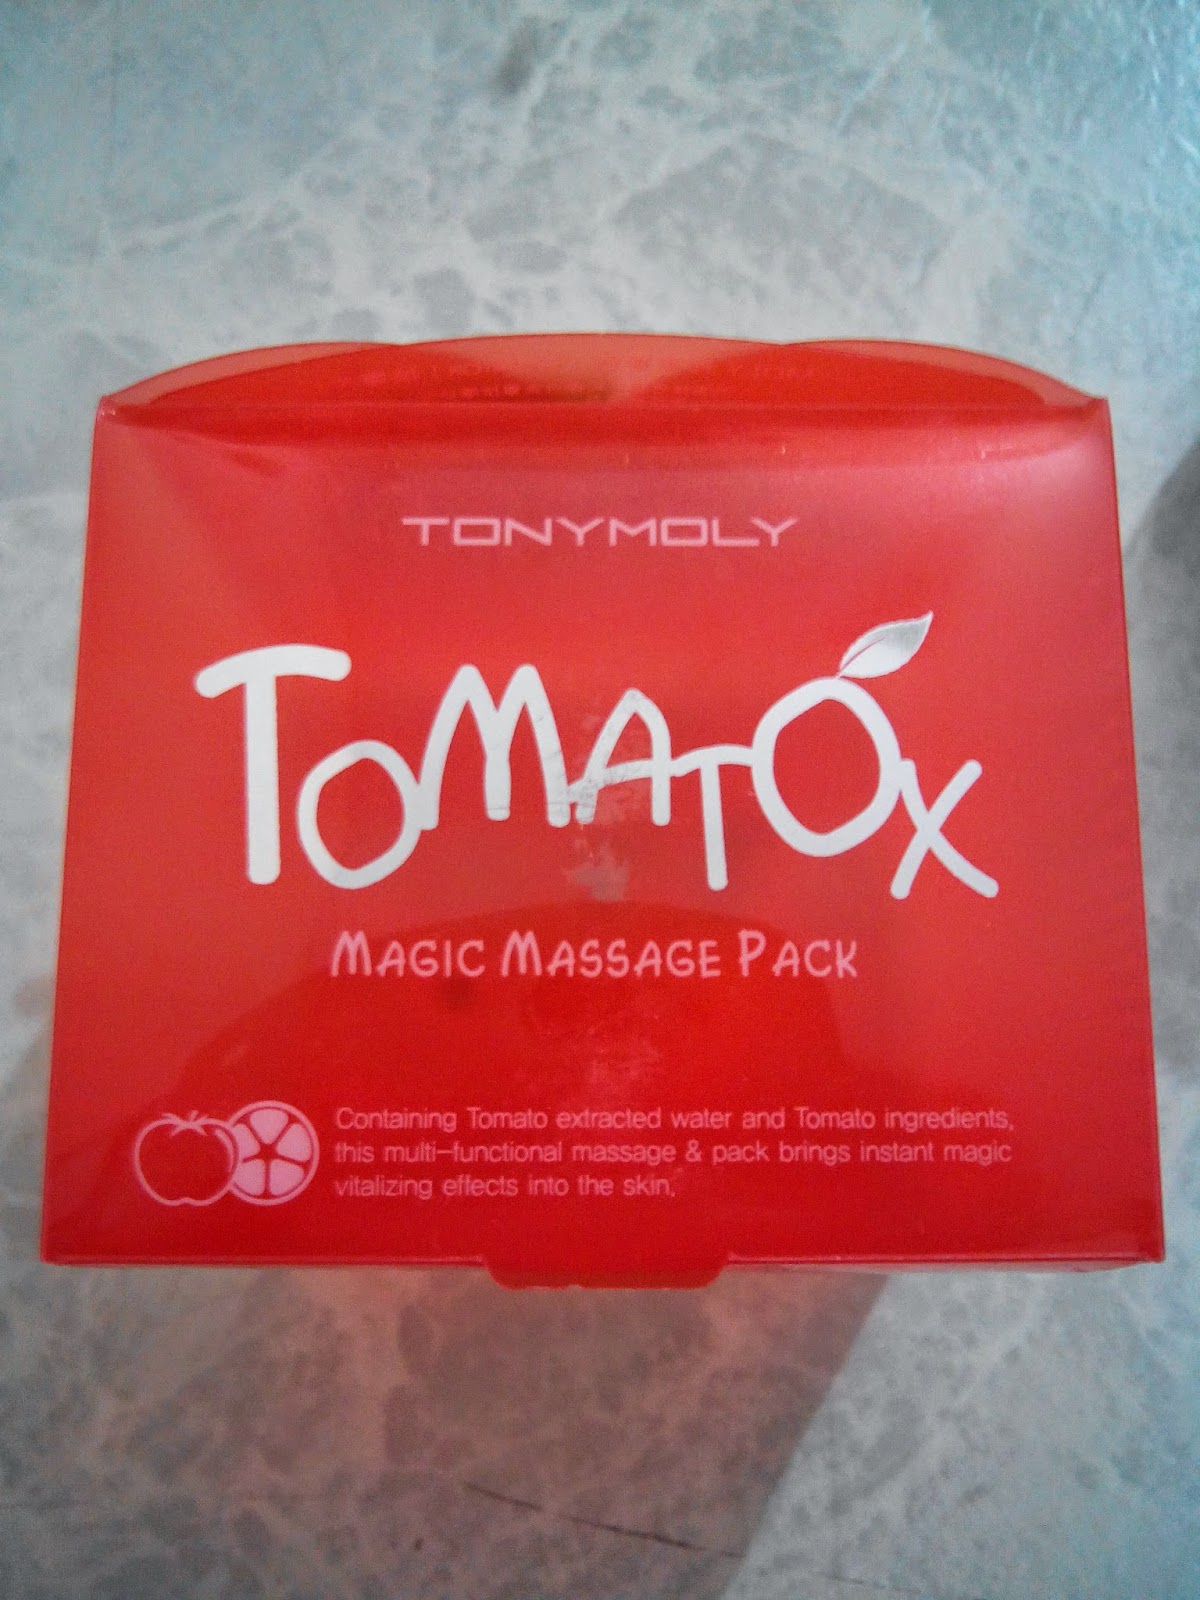 Massage magic. Перевести Pack. Pack перевод. Pack перевод на русский.